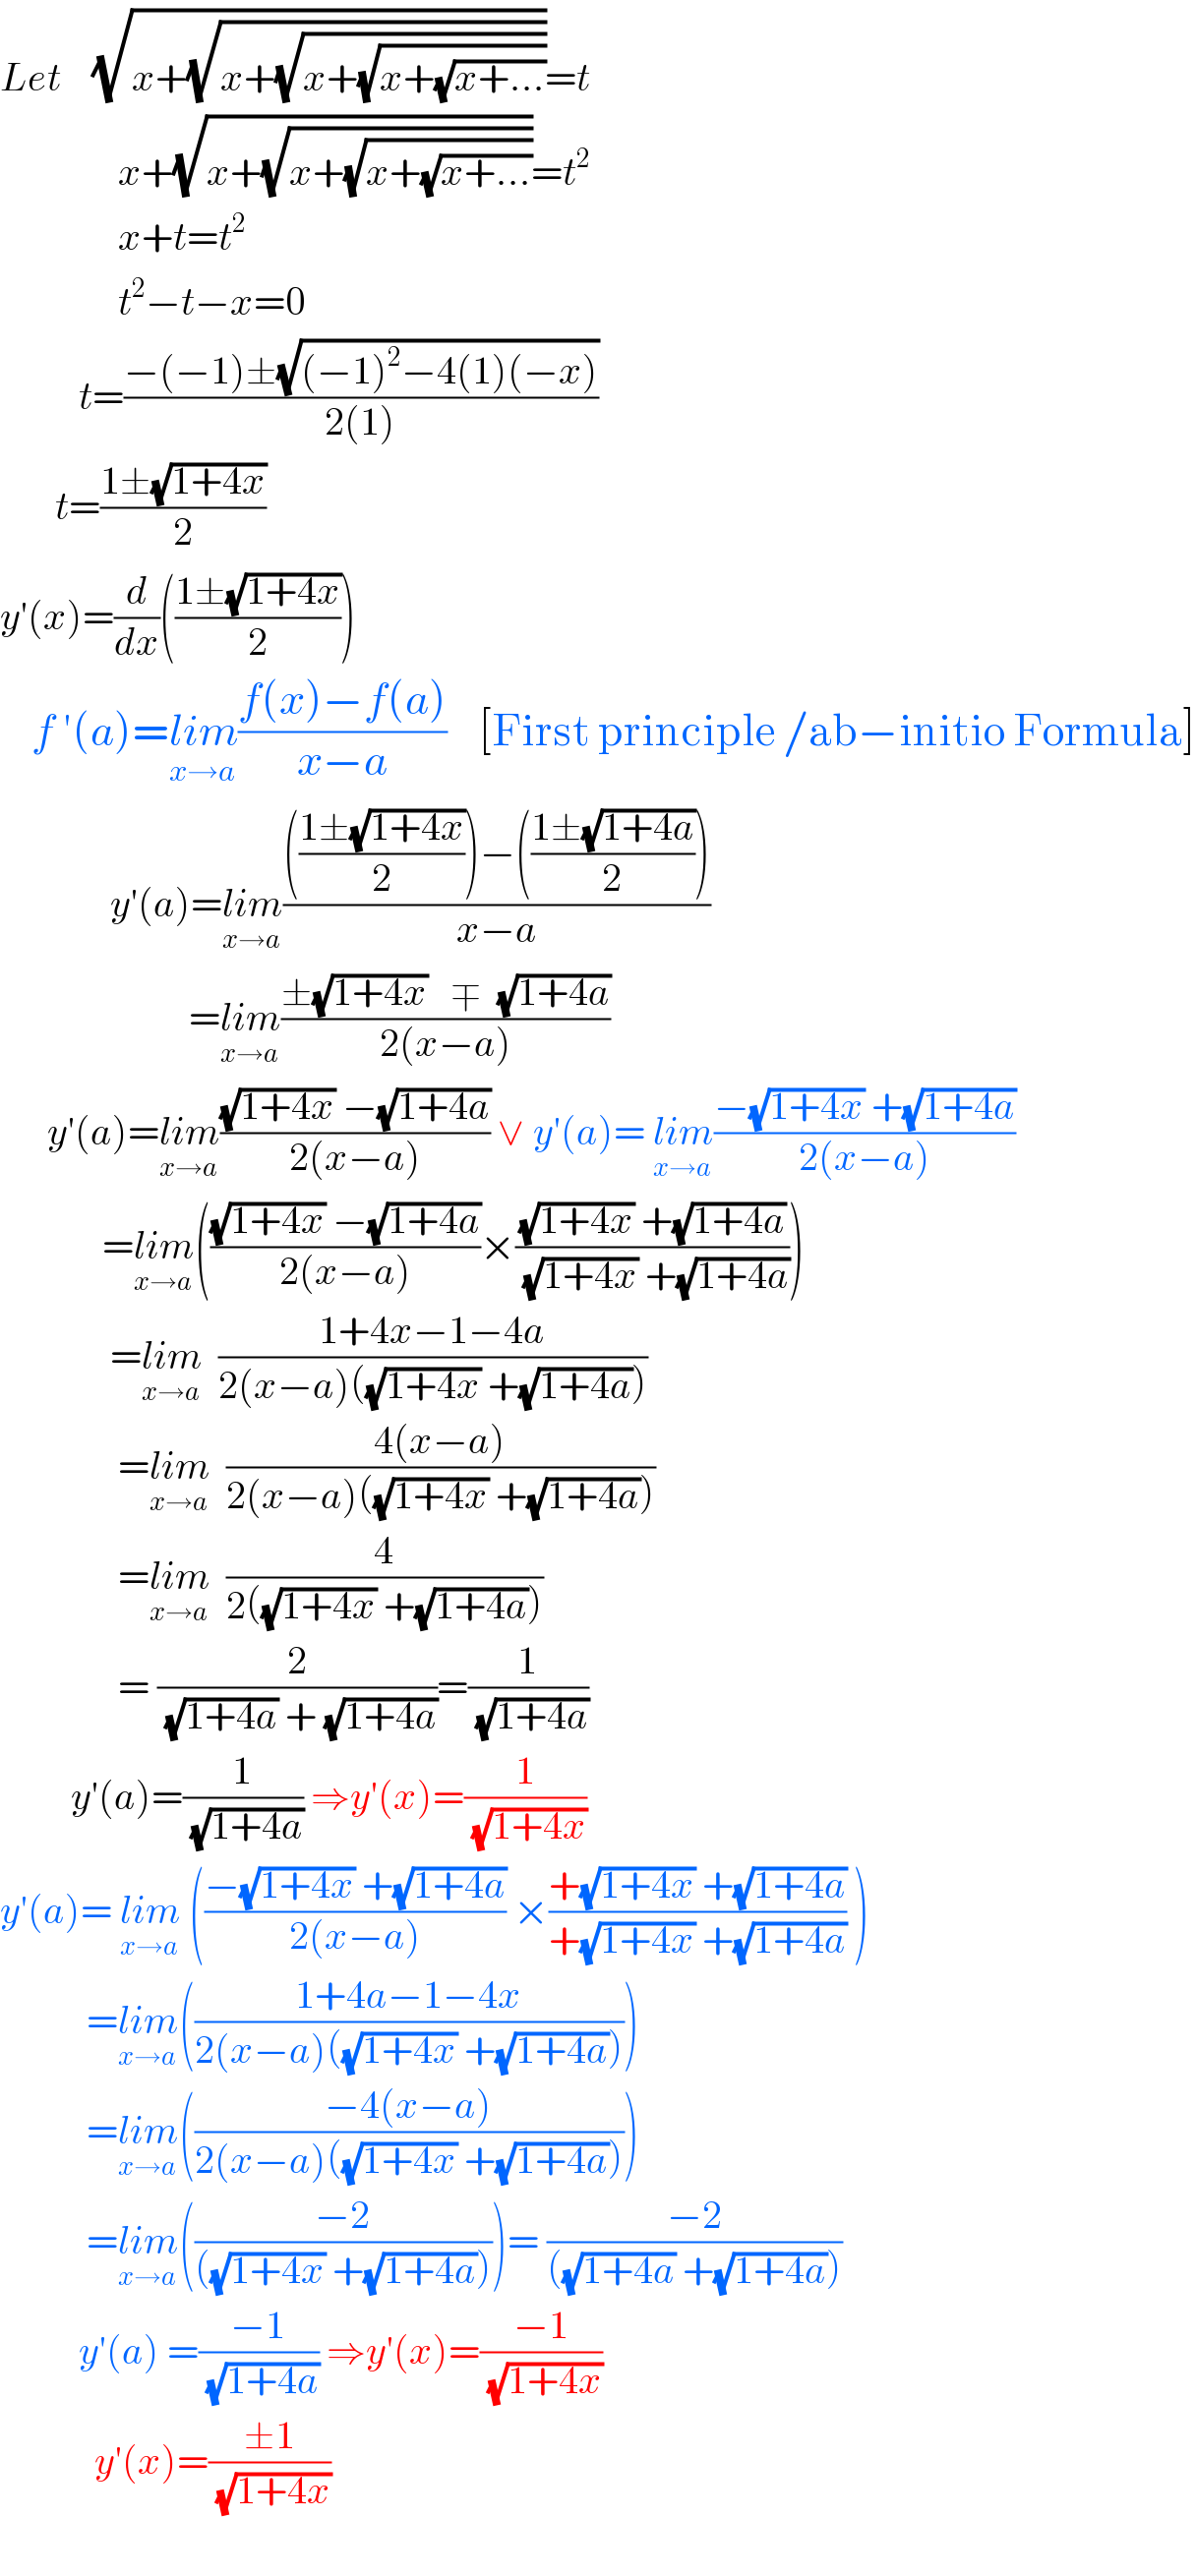 Let    (√(x+(√(x+(√(x+(√(x+(√(x+...))))))))))=t                 x+(√(x+(√(x+(√(x+(√(x+...))))))))=t^2                  x+t=t^2                  t^2 −t−x=0            t=((−(−1)±(√((−1)^2 −4(1)(−x))))/(2(1)))         t=((1±(√(1+4x)))/2)    y′(x)=(d/dx)(((1±(√(1+4x)))/2))       f ′(a)=lim_(x→a) ((f(x)−f(a))/(x−a))    [First principle /ab−initio Formula]                y′(a)=lim_(x→a) (((((1±(√(1+4x)))/2))−(((1±(√(1+4a)))/2)))/(x−a))                          =lim_(x→a) ((±(√(1+4x))   ∓  (√(1+4a)))/(2(x−a)))        y′(a)=lim_(x→a) (((√(1+4x)) −(√(1+4a)))/(2(x−a))) ∨ y′(a)= lim_(x→a) ((−(√(1+4x)) +(√(1+4a)))/(2(x−a)))               =lim_(x→a) ((((√(1+4x)) −(√(1+4a)))/(2(x−a)))×(((√(1+4x)) +(√(1+4a)))/((√(1+4x)) +(√(1+4a)))))                =lim_(x→a)   ((1+4x−1−4a)/(2(x−a)((√(1+4x)) +(√(1+4a)))))                 =lim_(x→a)   ((4(x−a))/(2(x−a)((√(1+4x)) +(√(1+4a)))))                 =lim_(x→a)   (4/(2((√(1+4x)) +(√(1+4a)))))                 = (2/((√(1+4a)) + (√(1+4a))))=(1/(√(1+4a)))           y′(a)=(1/(√(1+4a))) ⇒y′(x)=(1/(√(1+4x)))        y′(a)= lim_(x→a)  (((−(√(1+4x)) +(√(1+4a)))/(2(x−a))) ×((+(√(1+4x)) +(√(1+4a)))/(+(√(1+4x)) +(√(1+4a)))) )             =lim_(x→a) (((1+4a−1−4x)/(2(x−a)((√(1+4x)) +(√(1+4a))))))             =lim_(x→a) (((−4(x−a))/(2(x−a)((√(1+4x)) +(√(1+4a))))))             =lim_(x→a) (((−2)/(((√(1+4x)) +(√(1+4a))))))= ((−2)/(((√(1+4a)) +(√(1+4a)))))            y′(a) =((−1)/(√(1+4a))) ⇒y′(x)=((−1)/(√(1+4x)))              y′(x)=((±1)/(√(1+4x)))                